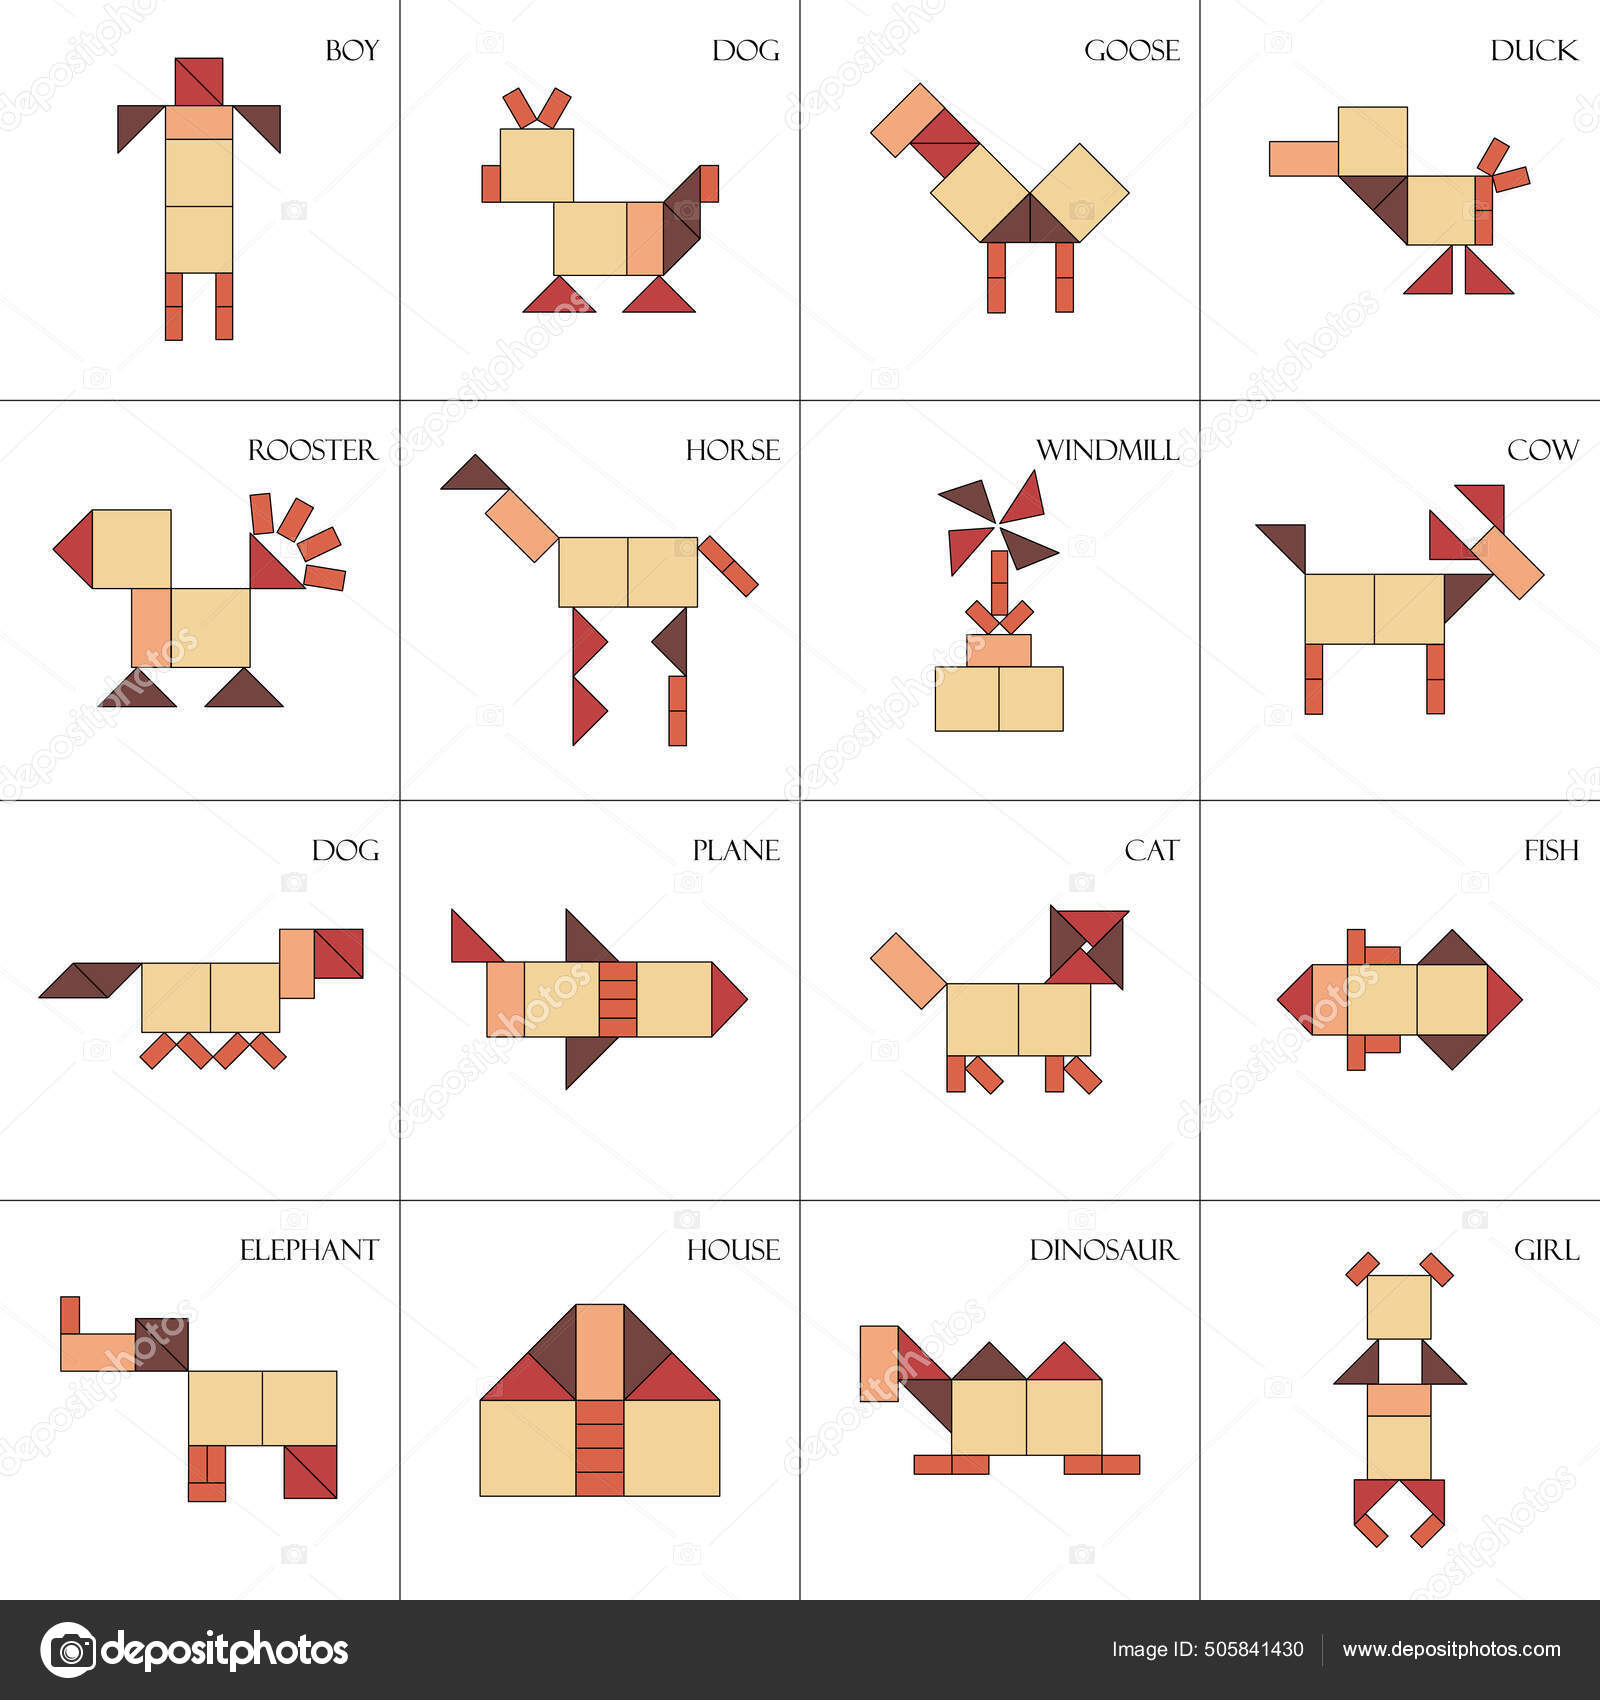 How to make Tangram Animals 